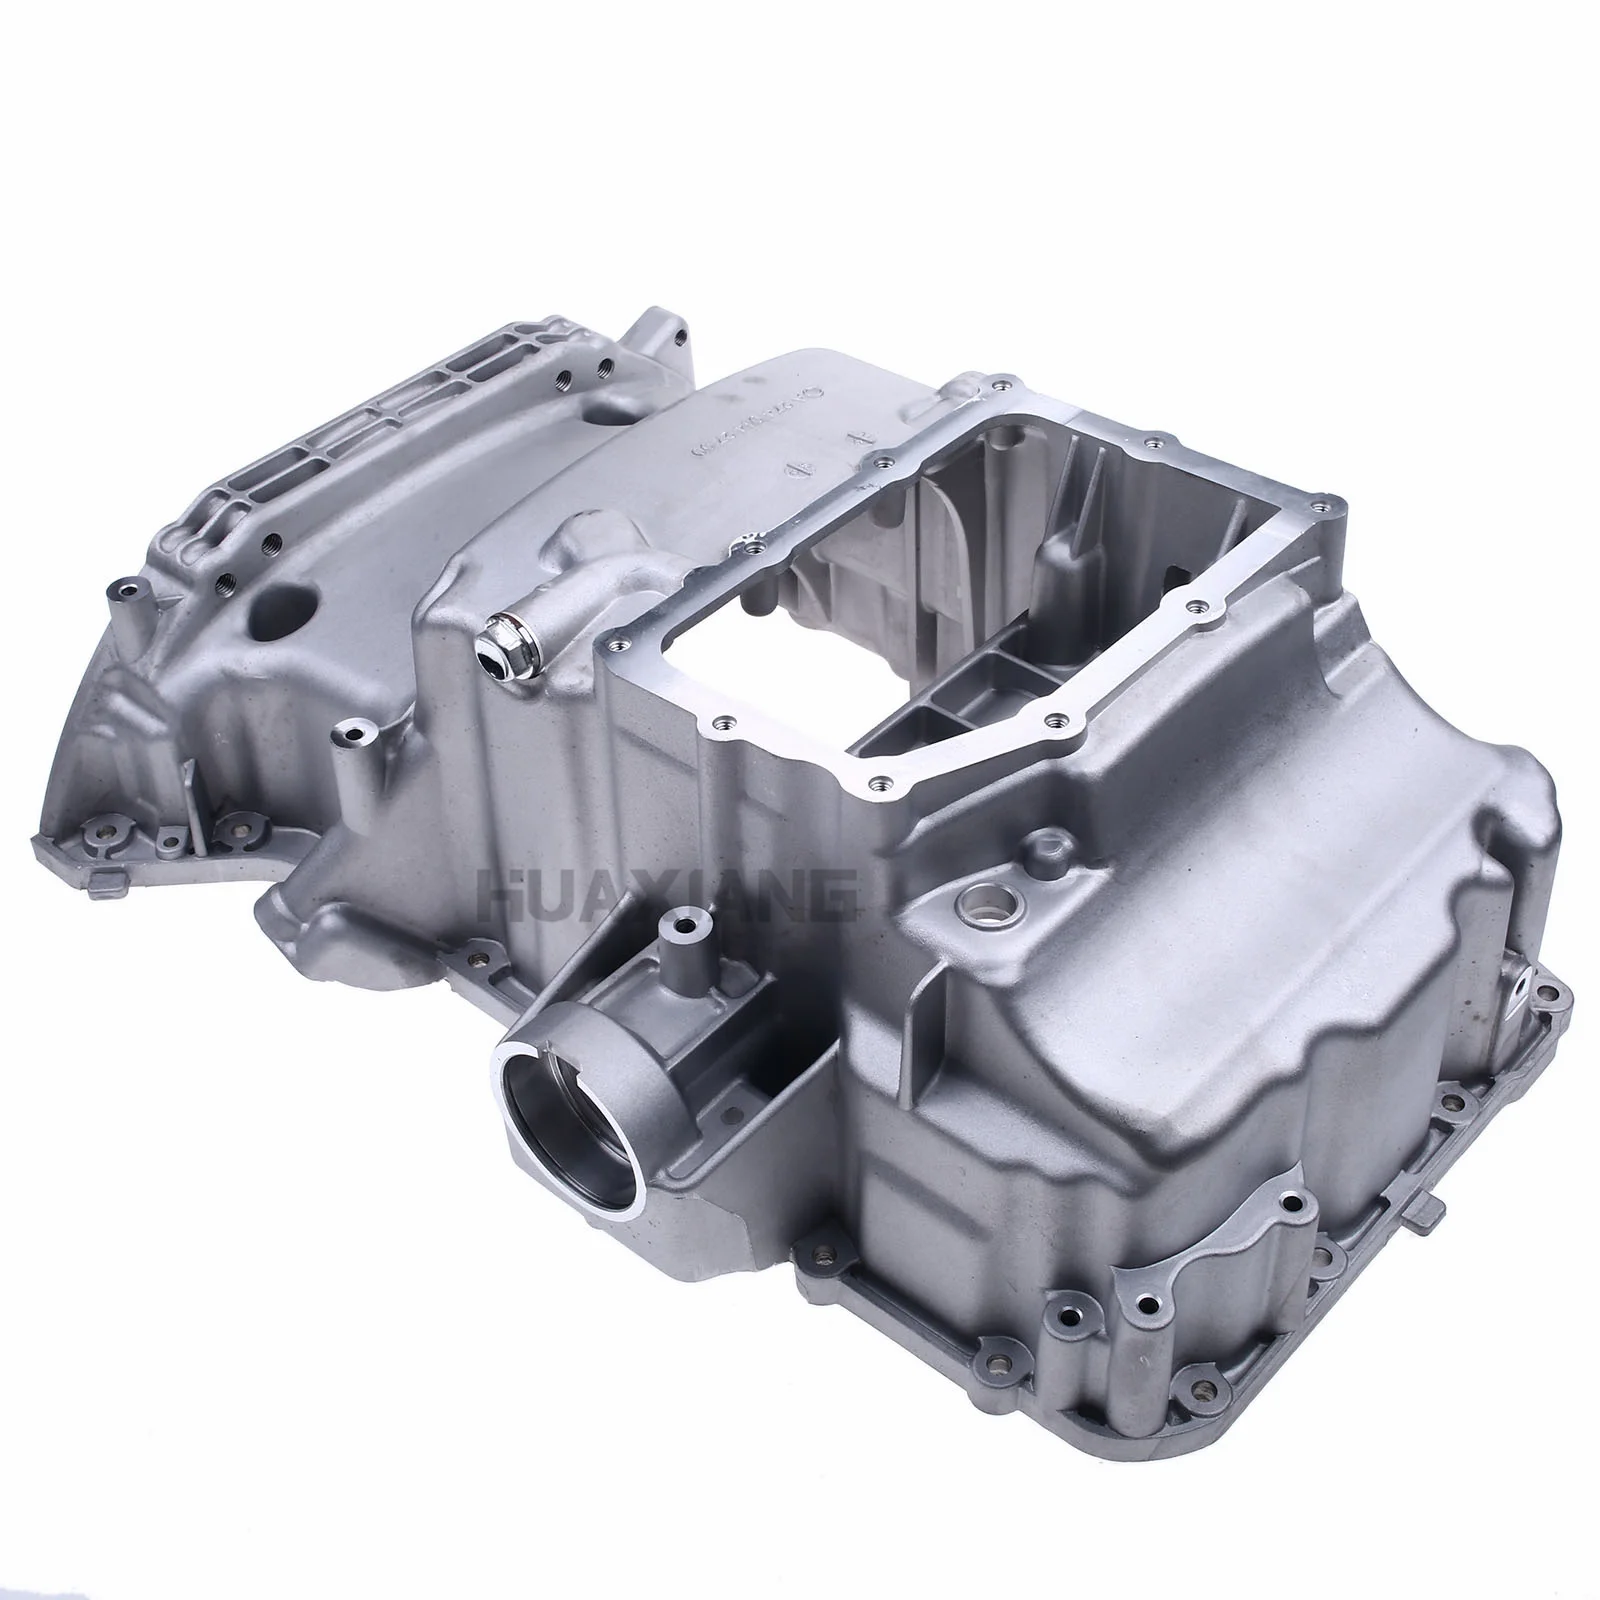 

RTS Upper Engine Oil Pan Sump for Mercedes-Benz W205 C300 X253 GLC300 16-17 L4 2.0L 2740100413 274 010 04 13